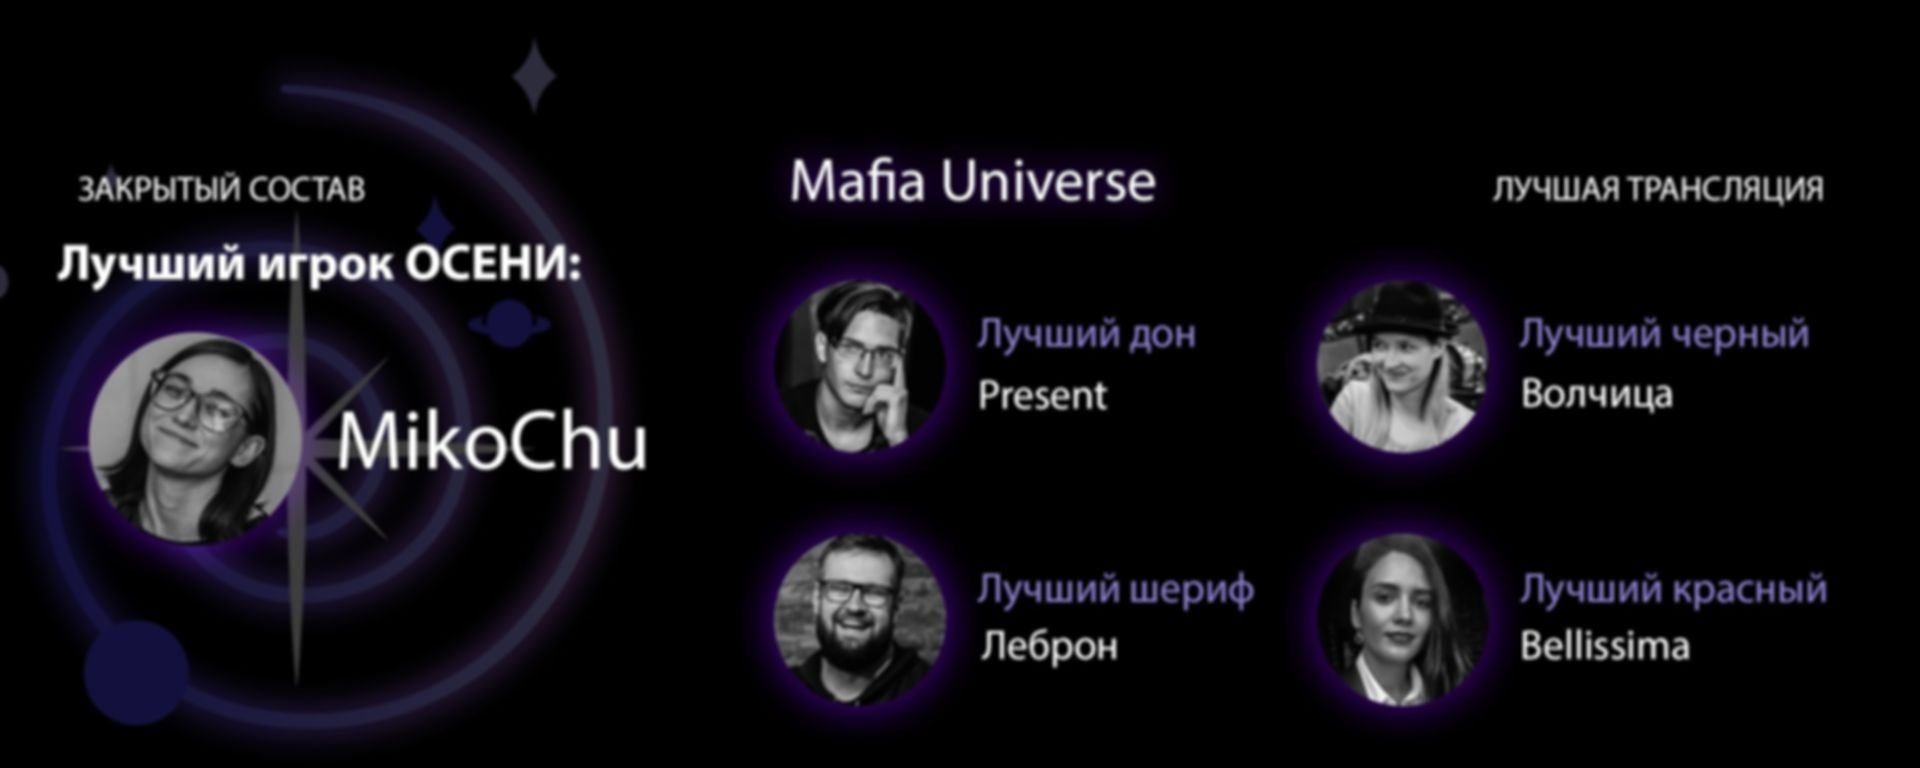 Mafia Universe SPb - фото